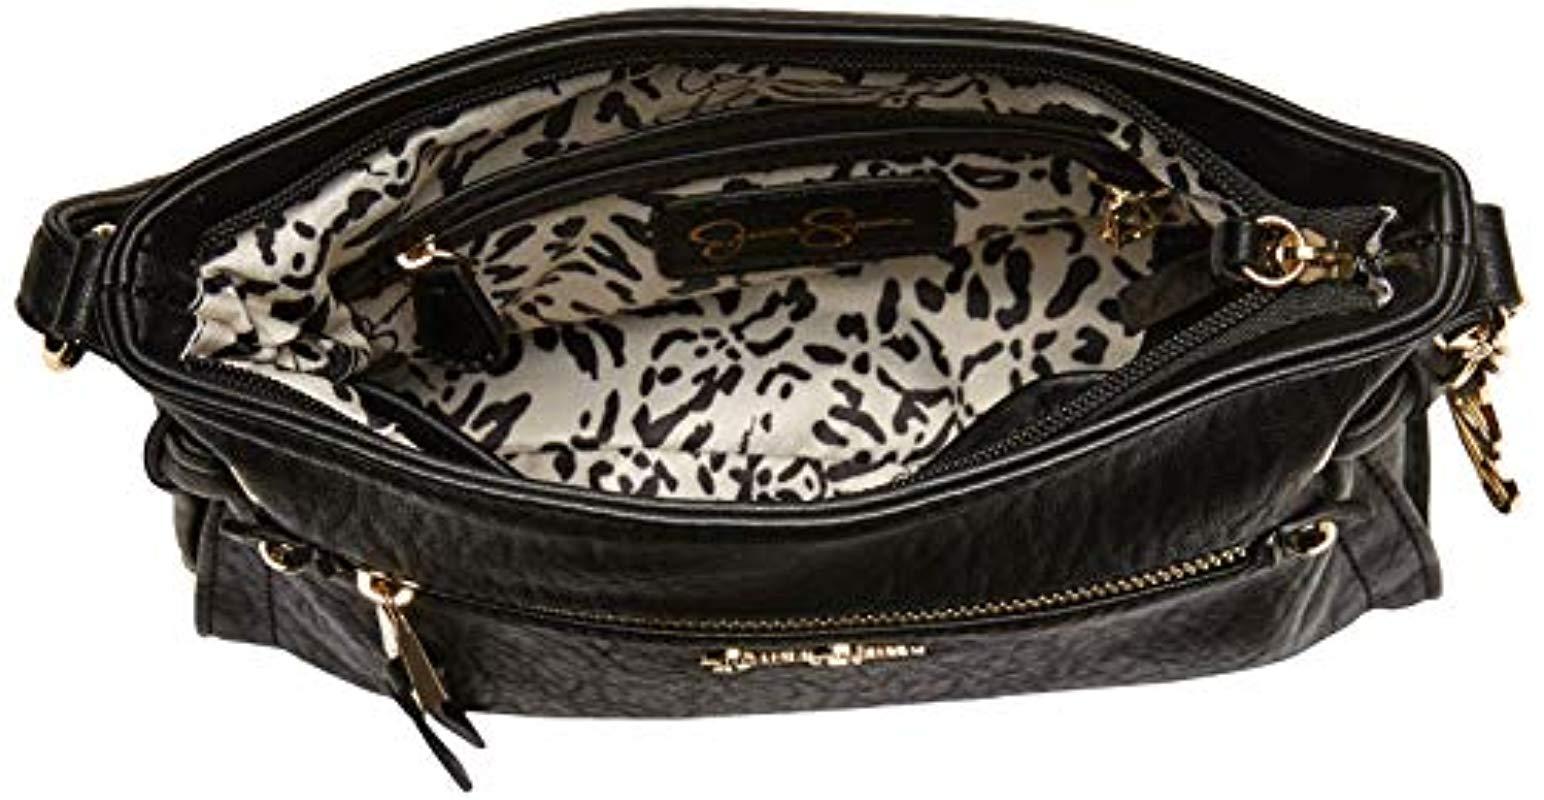 Jessica Simpson women's Astor crossbody bag purse